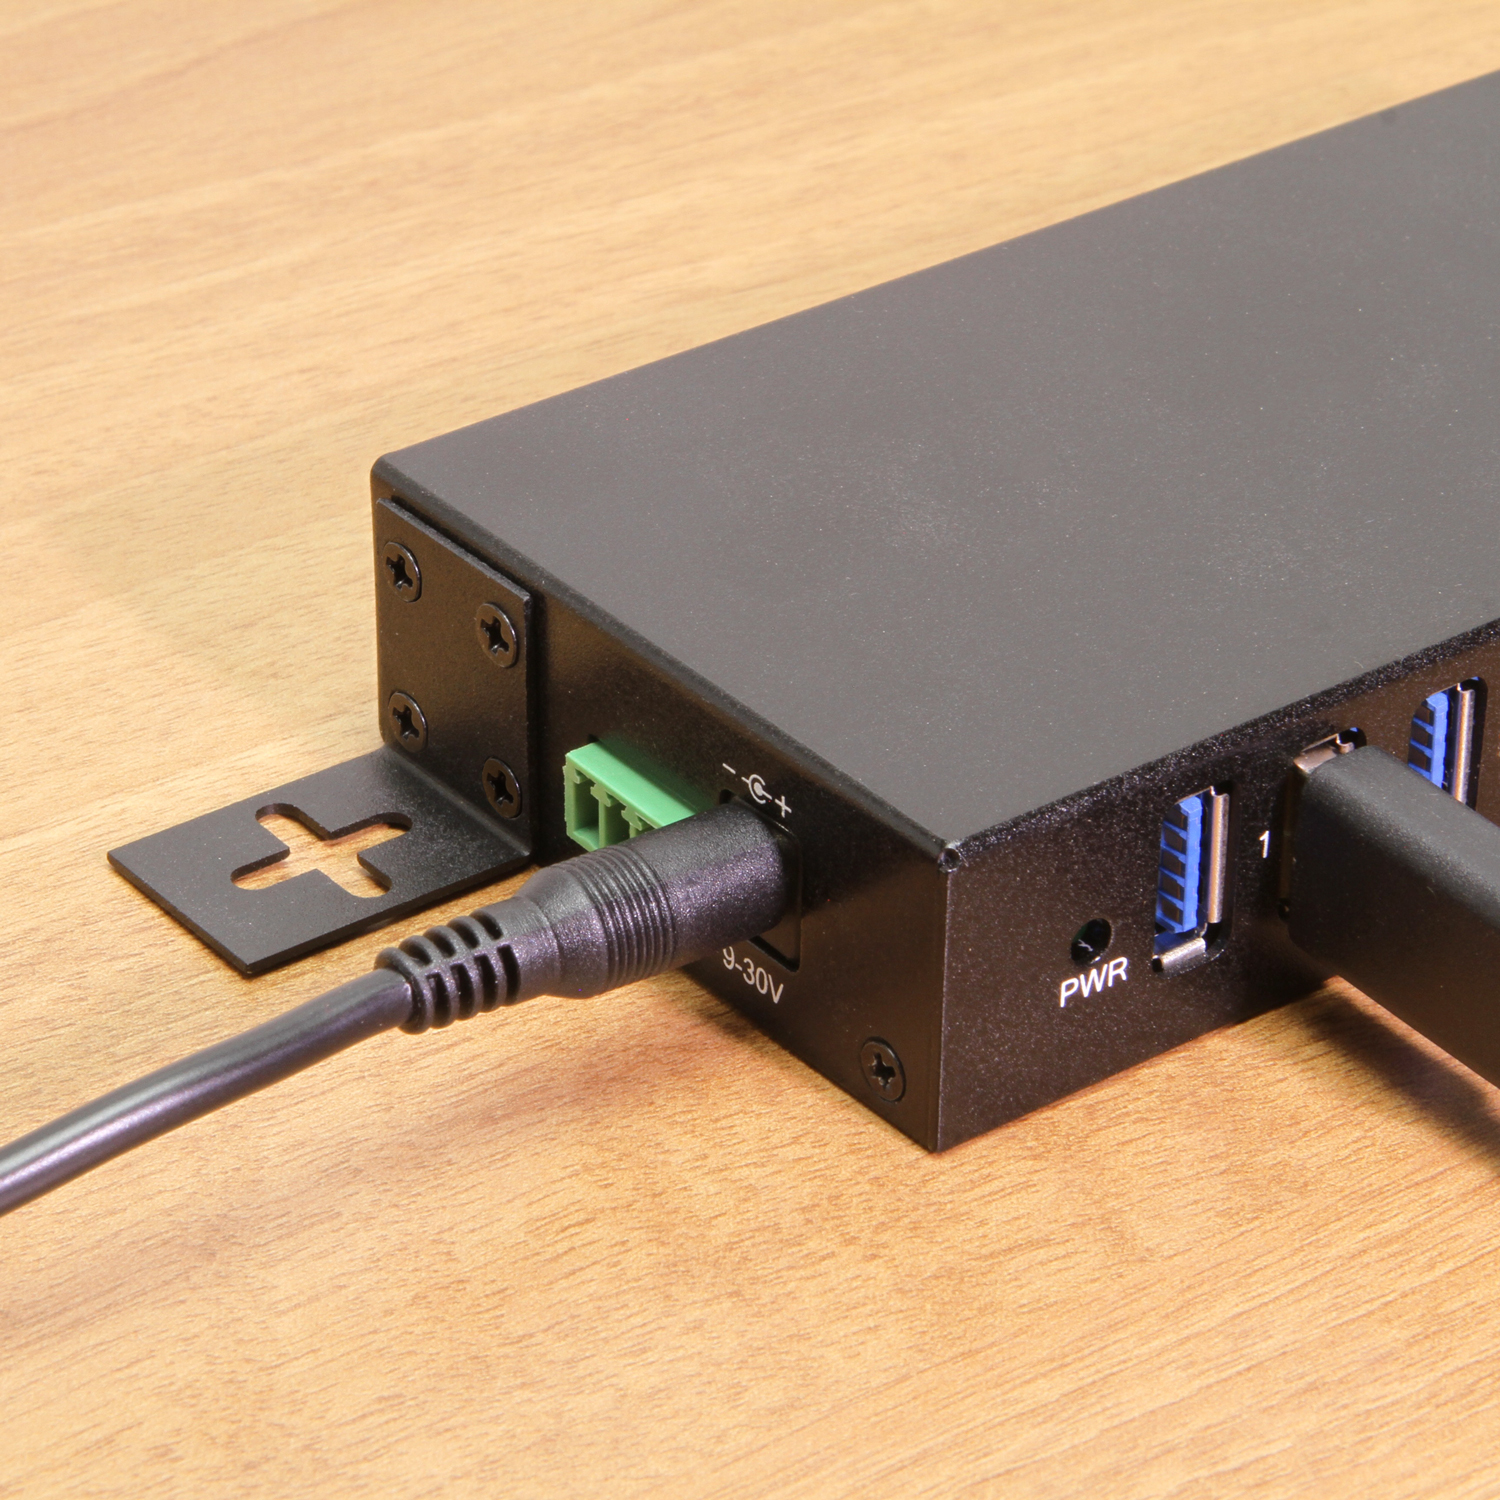 5.25 Inch Front Panel 7 Ports USB Hub w/ HD Audio & Microphone, USB 3.2 Gen